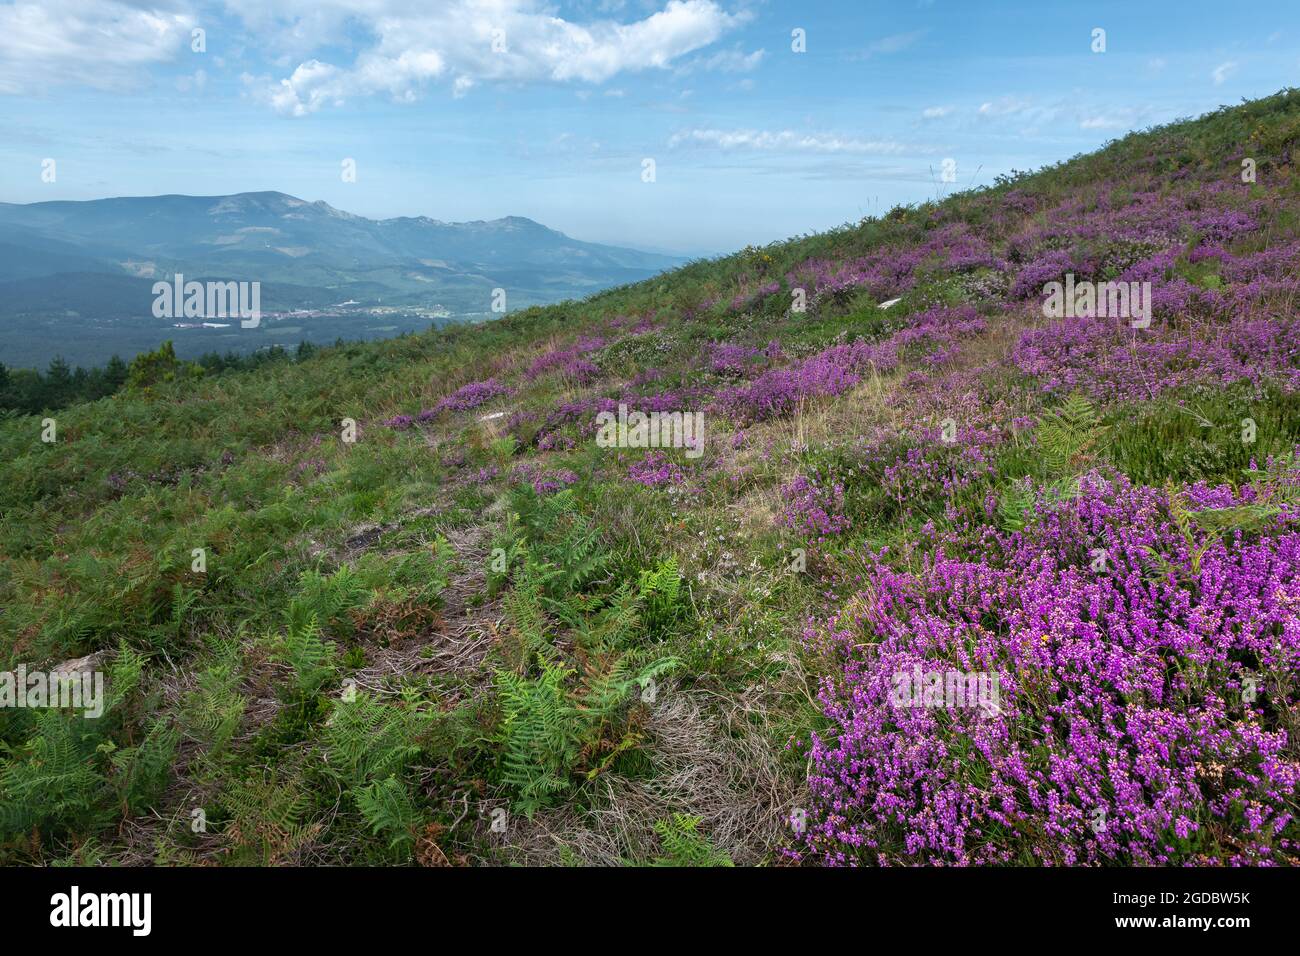 Campo di Heather in fiore, Urkiola parco naturale nei Paesi Baschi, Spagna Foto Stock